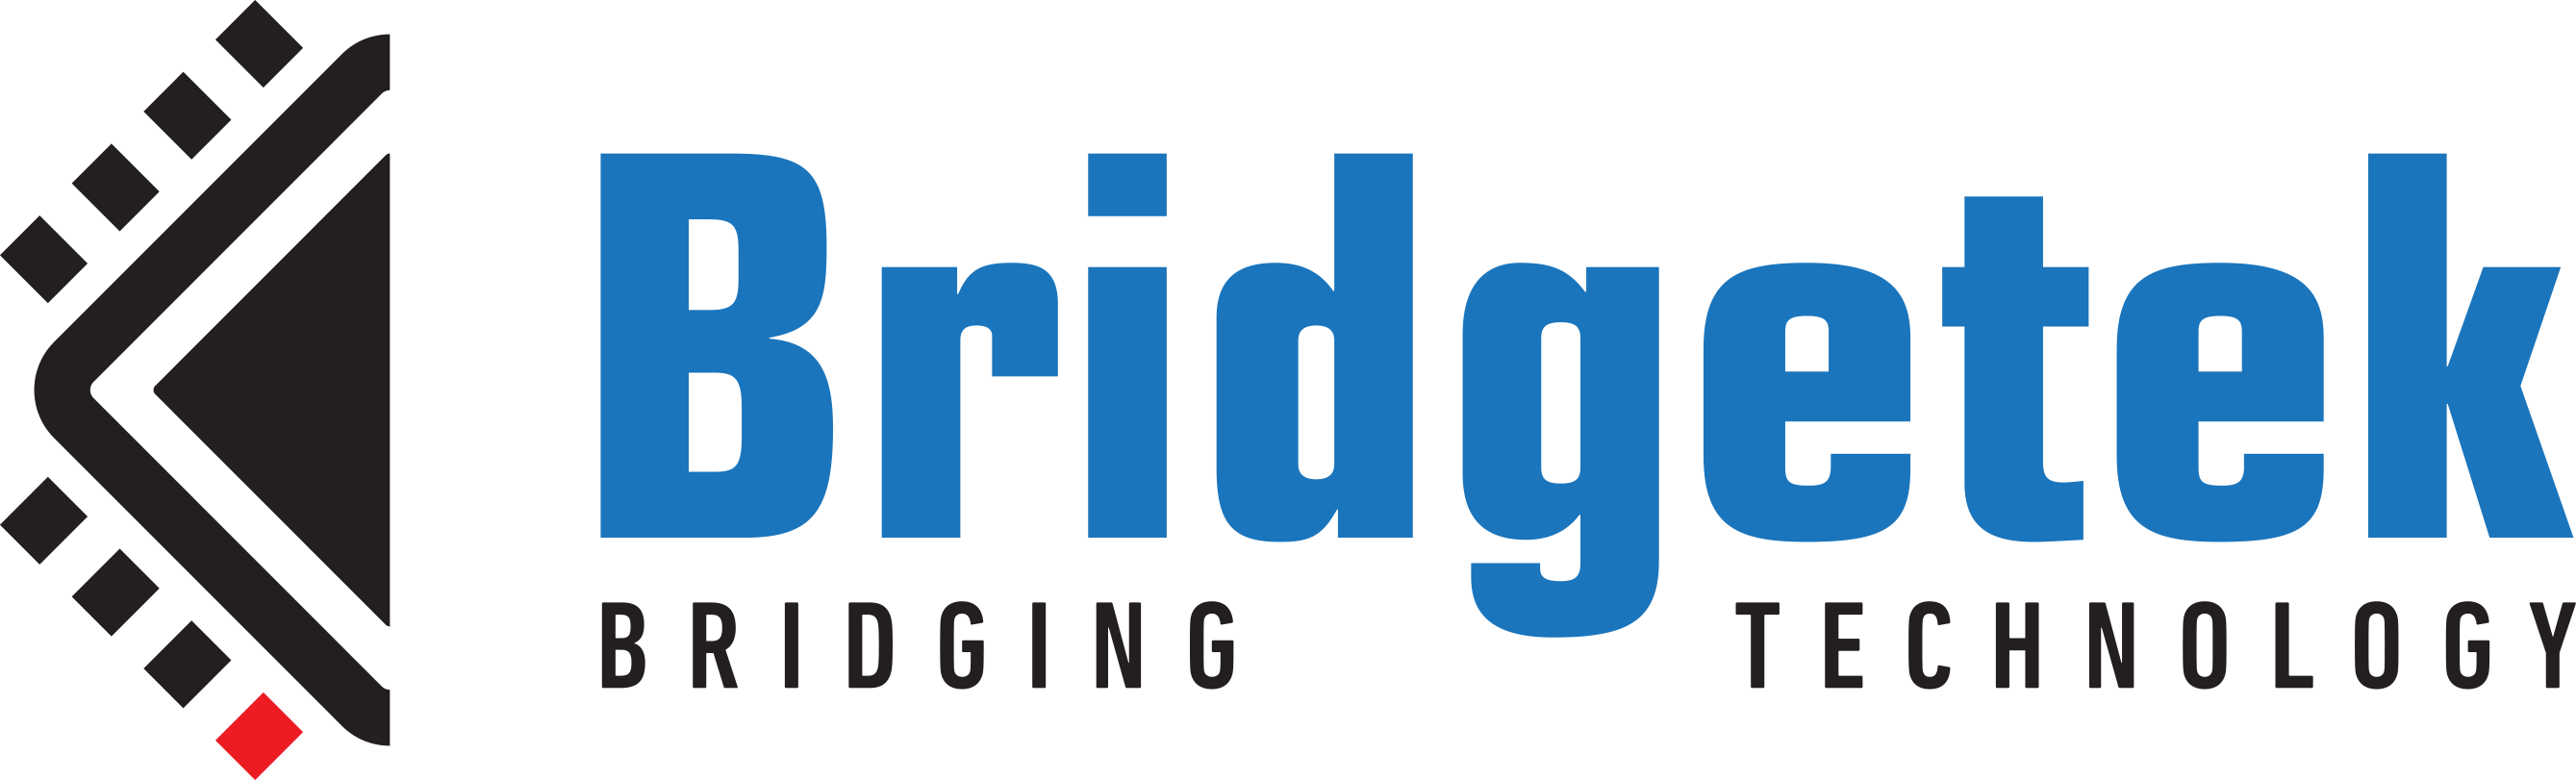 Bridgetek Pte Ltd. LOGO